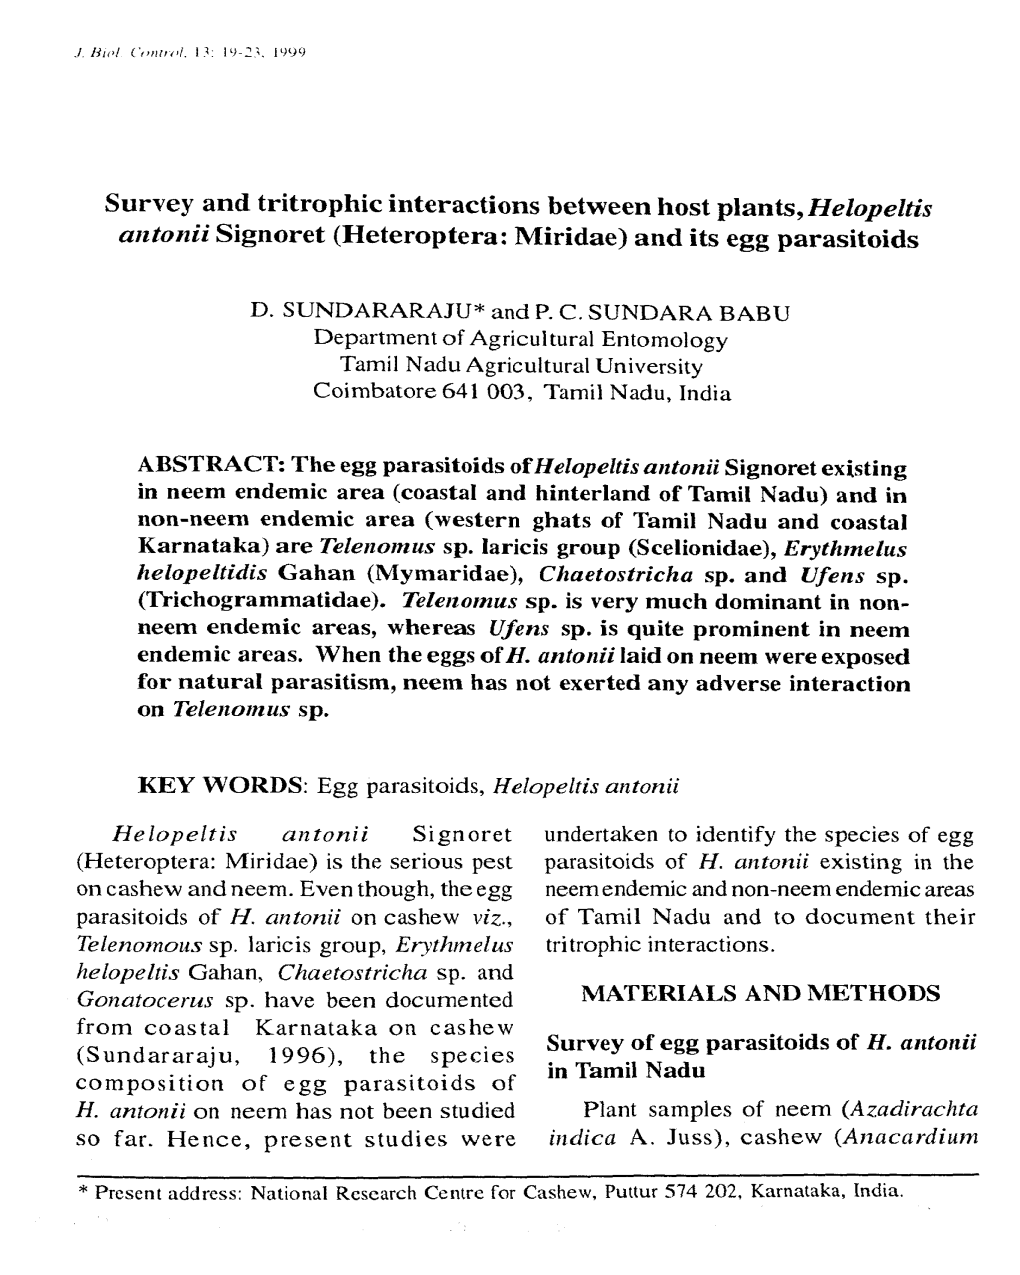 Heteroptera: Miridae) and Its Egg Parasitoids